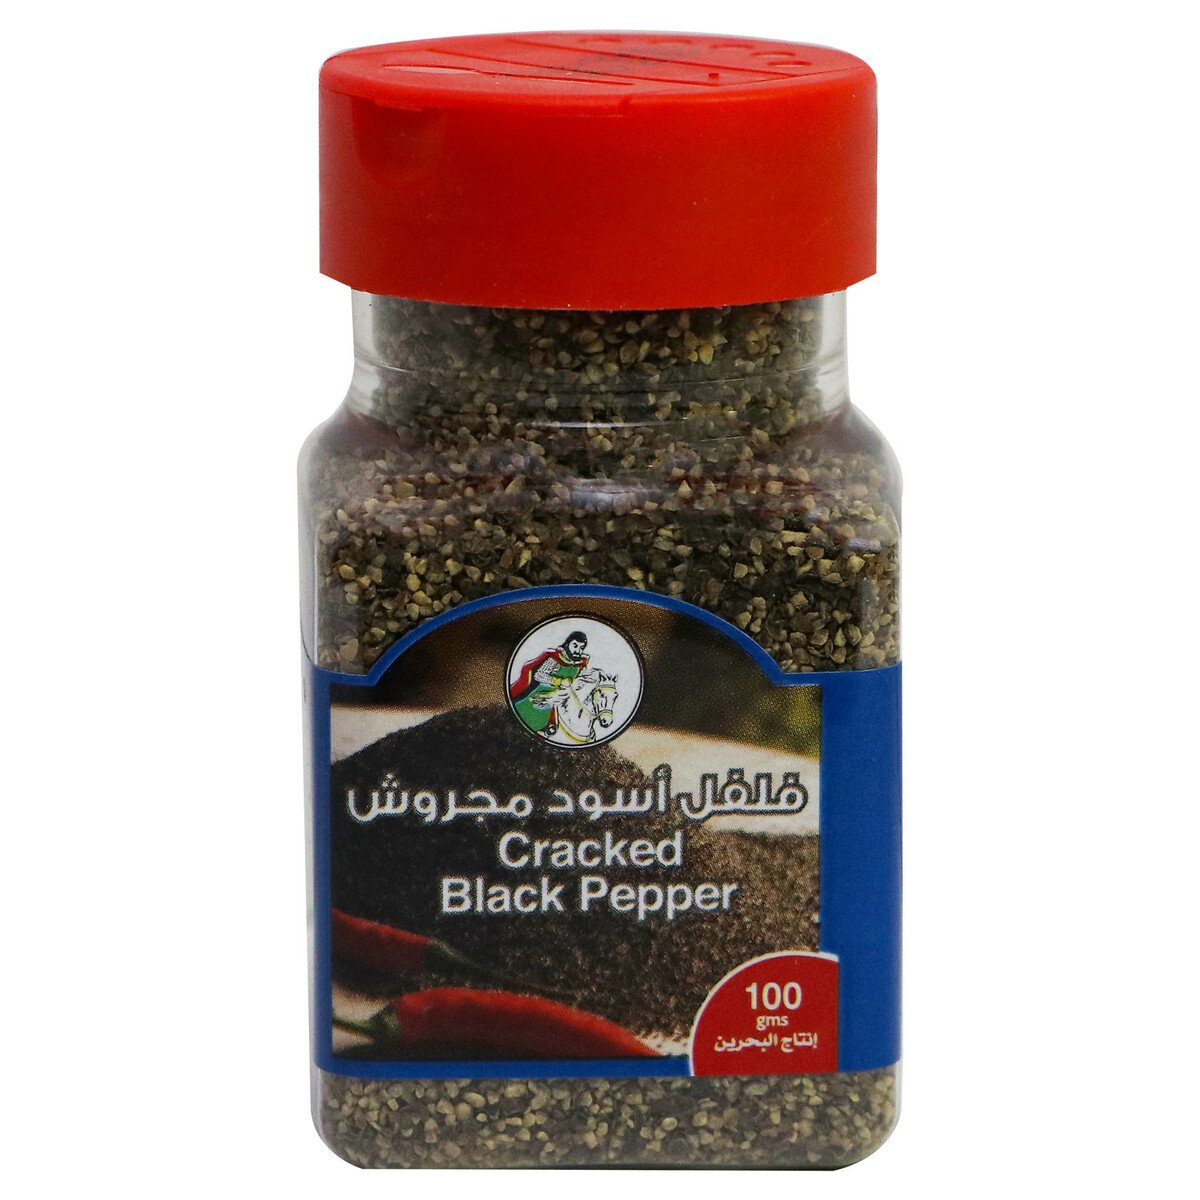 Al Fares Cracked Black Pepper 100g